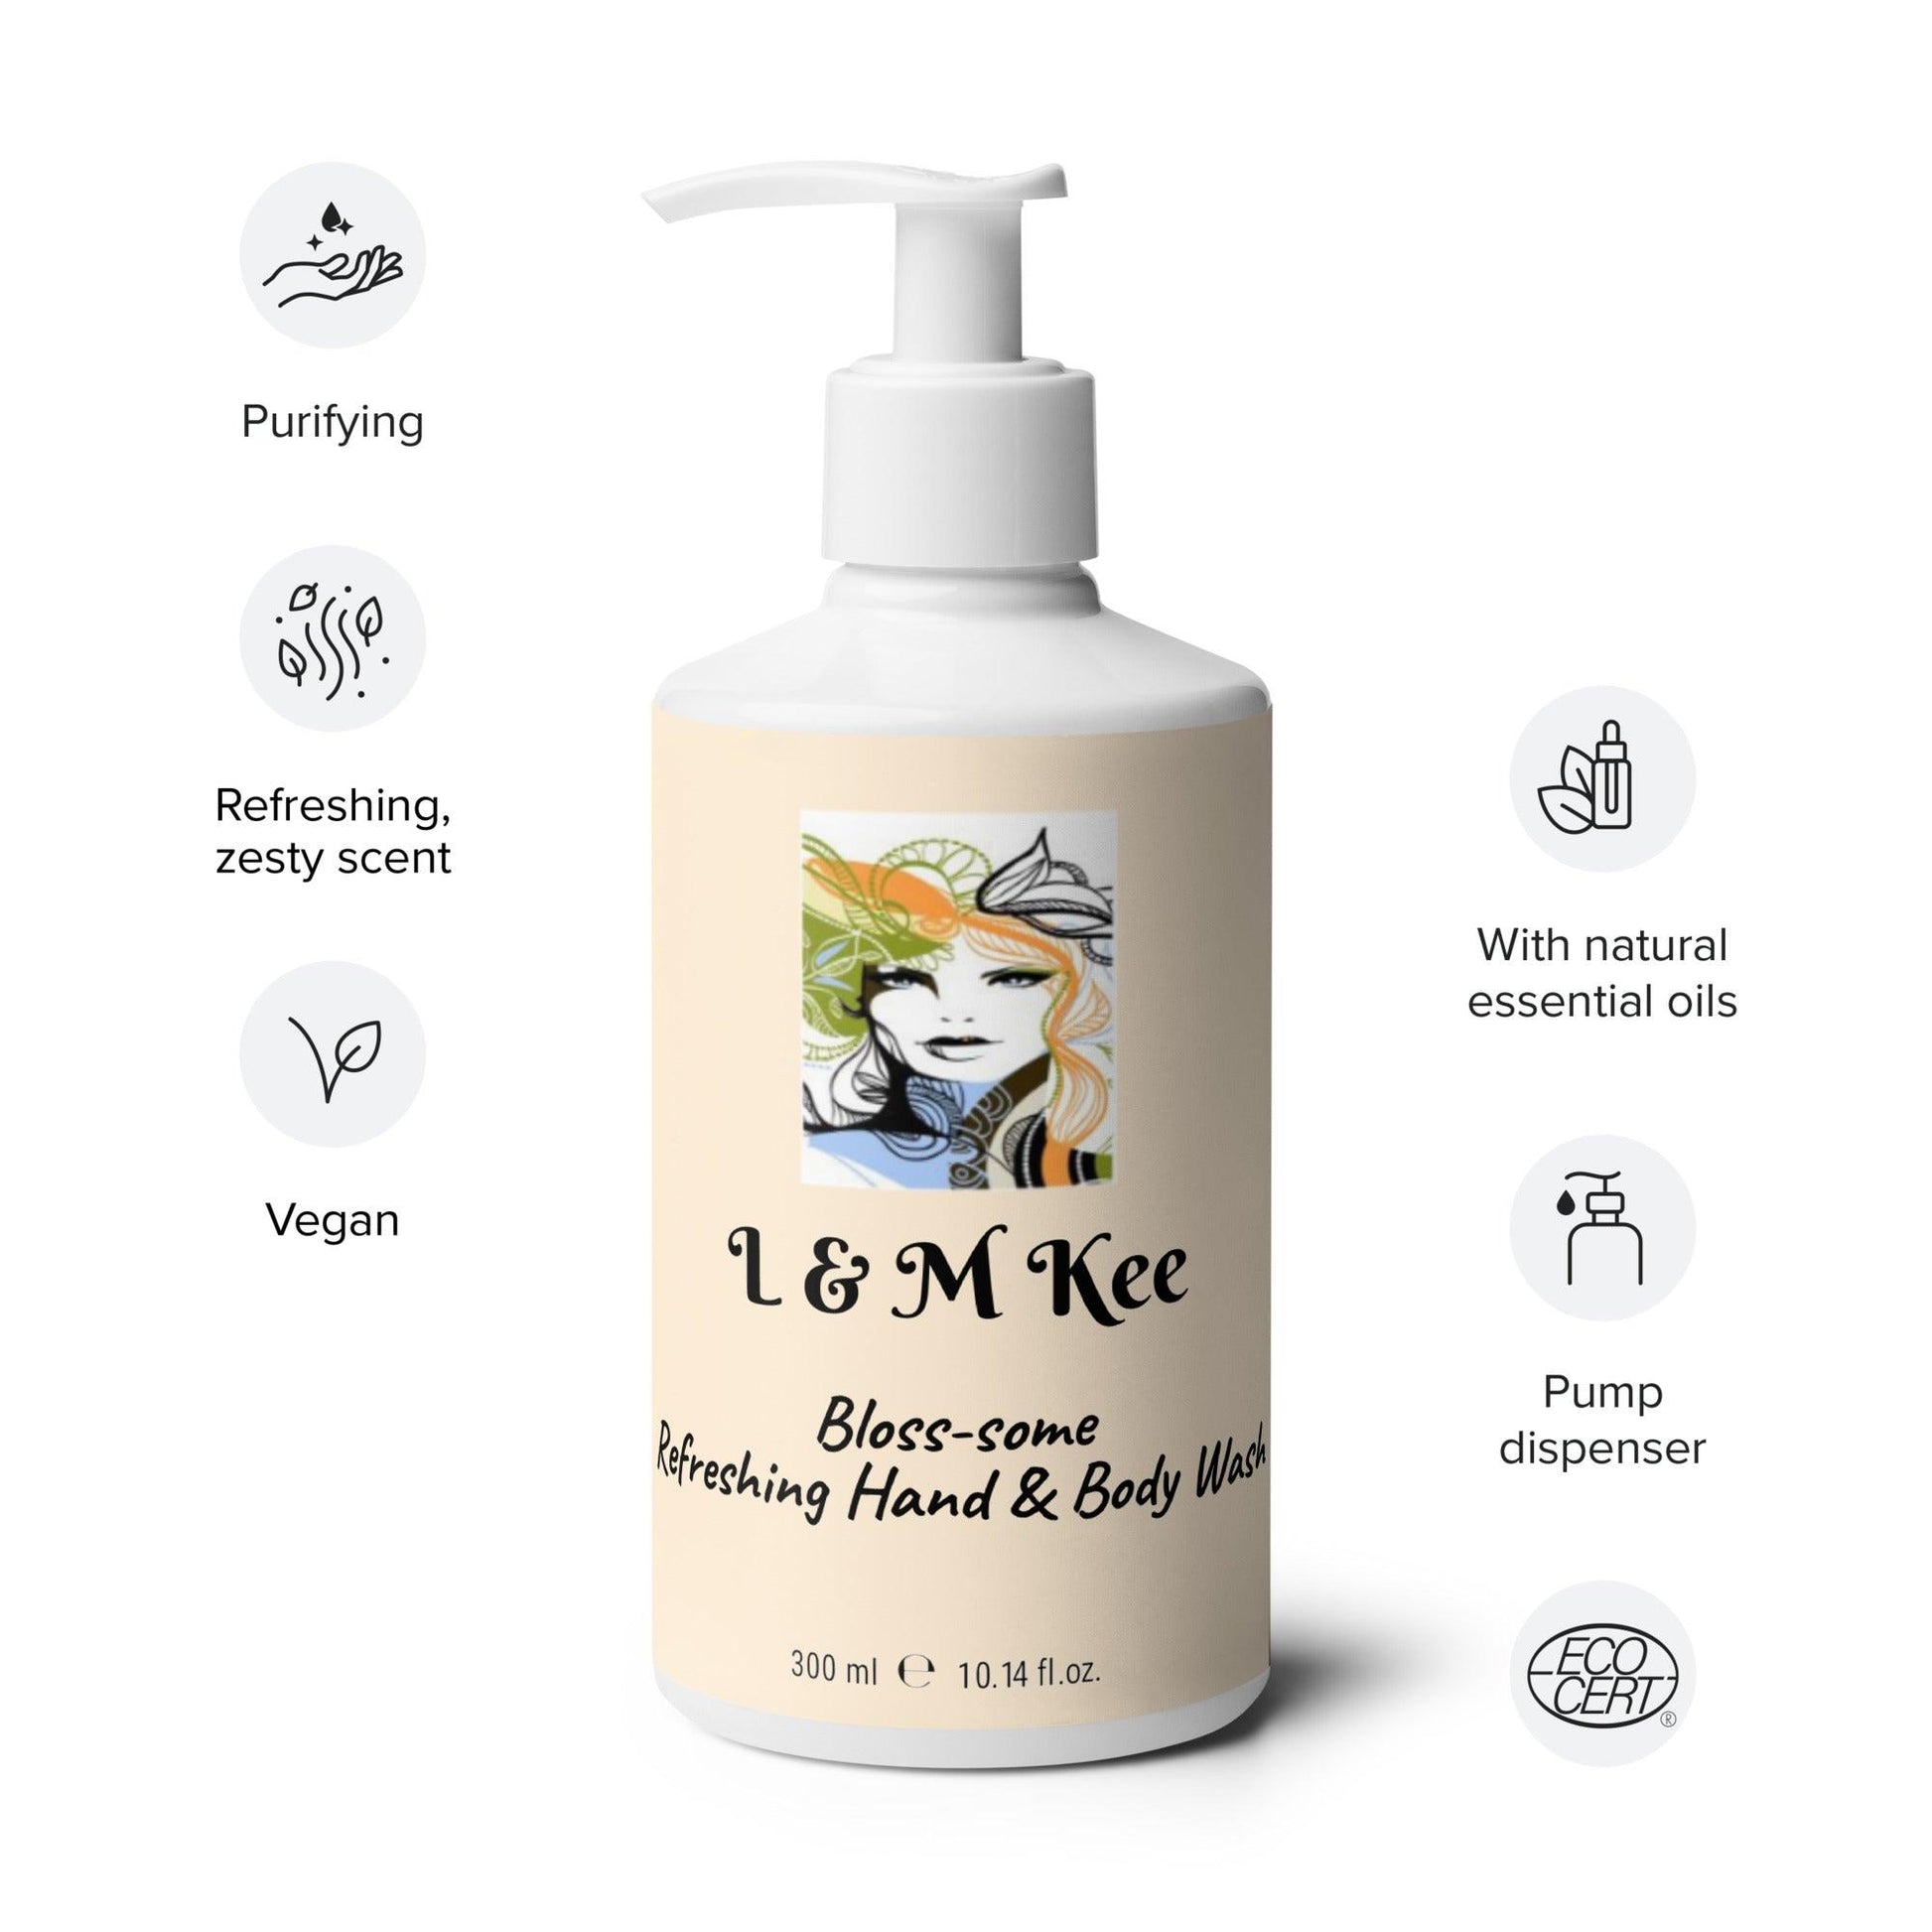 Bloss-some Refreshing Hand & Body Wash - L & M Kee, LLC